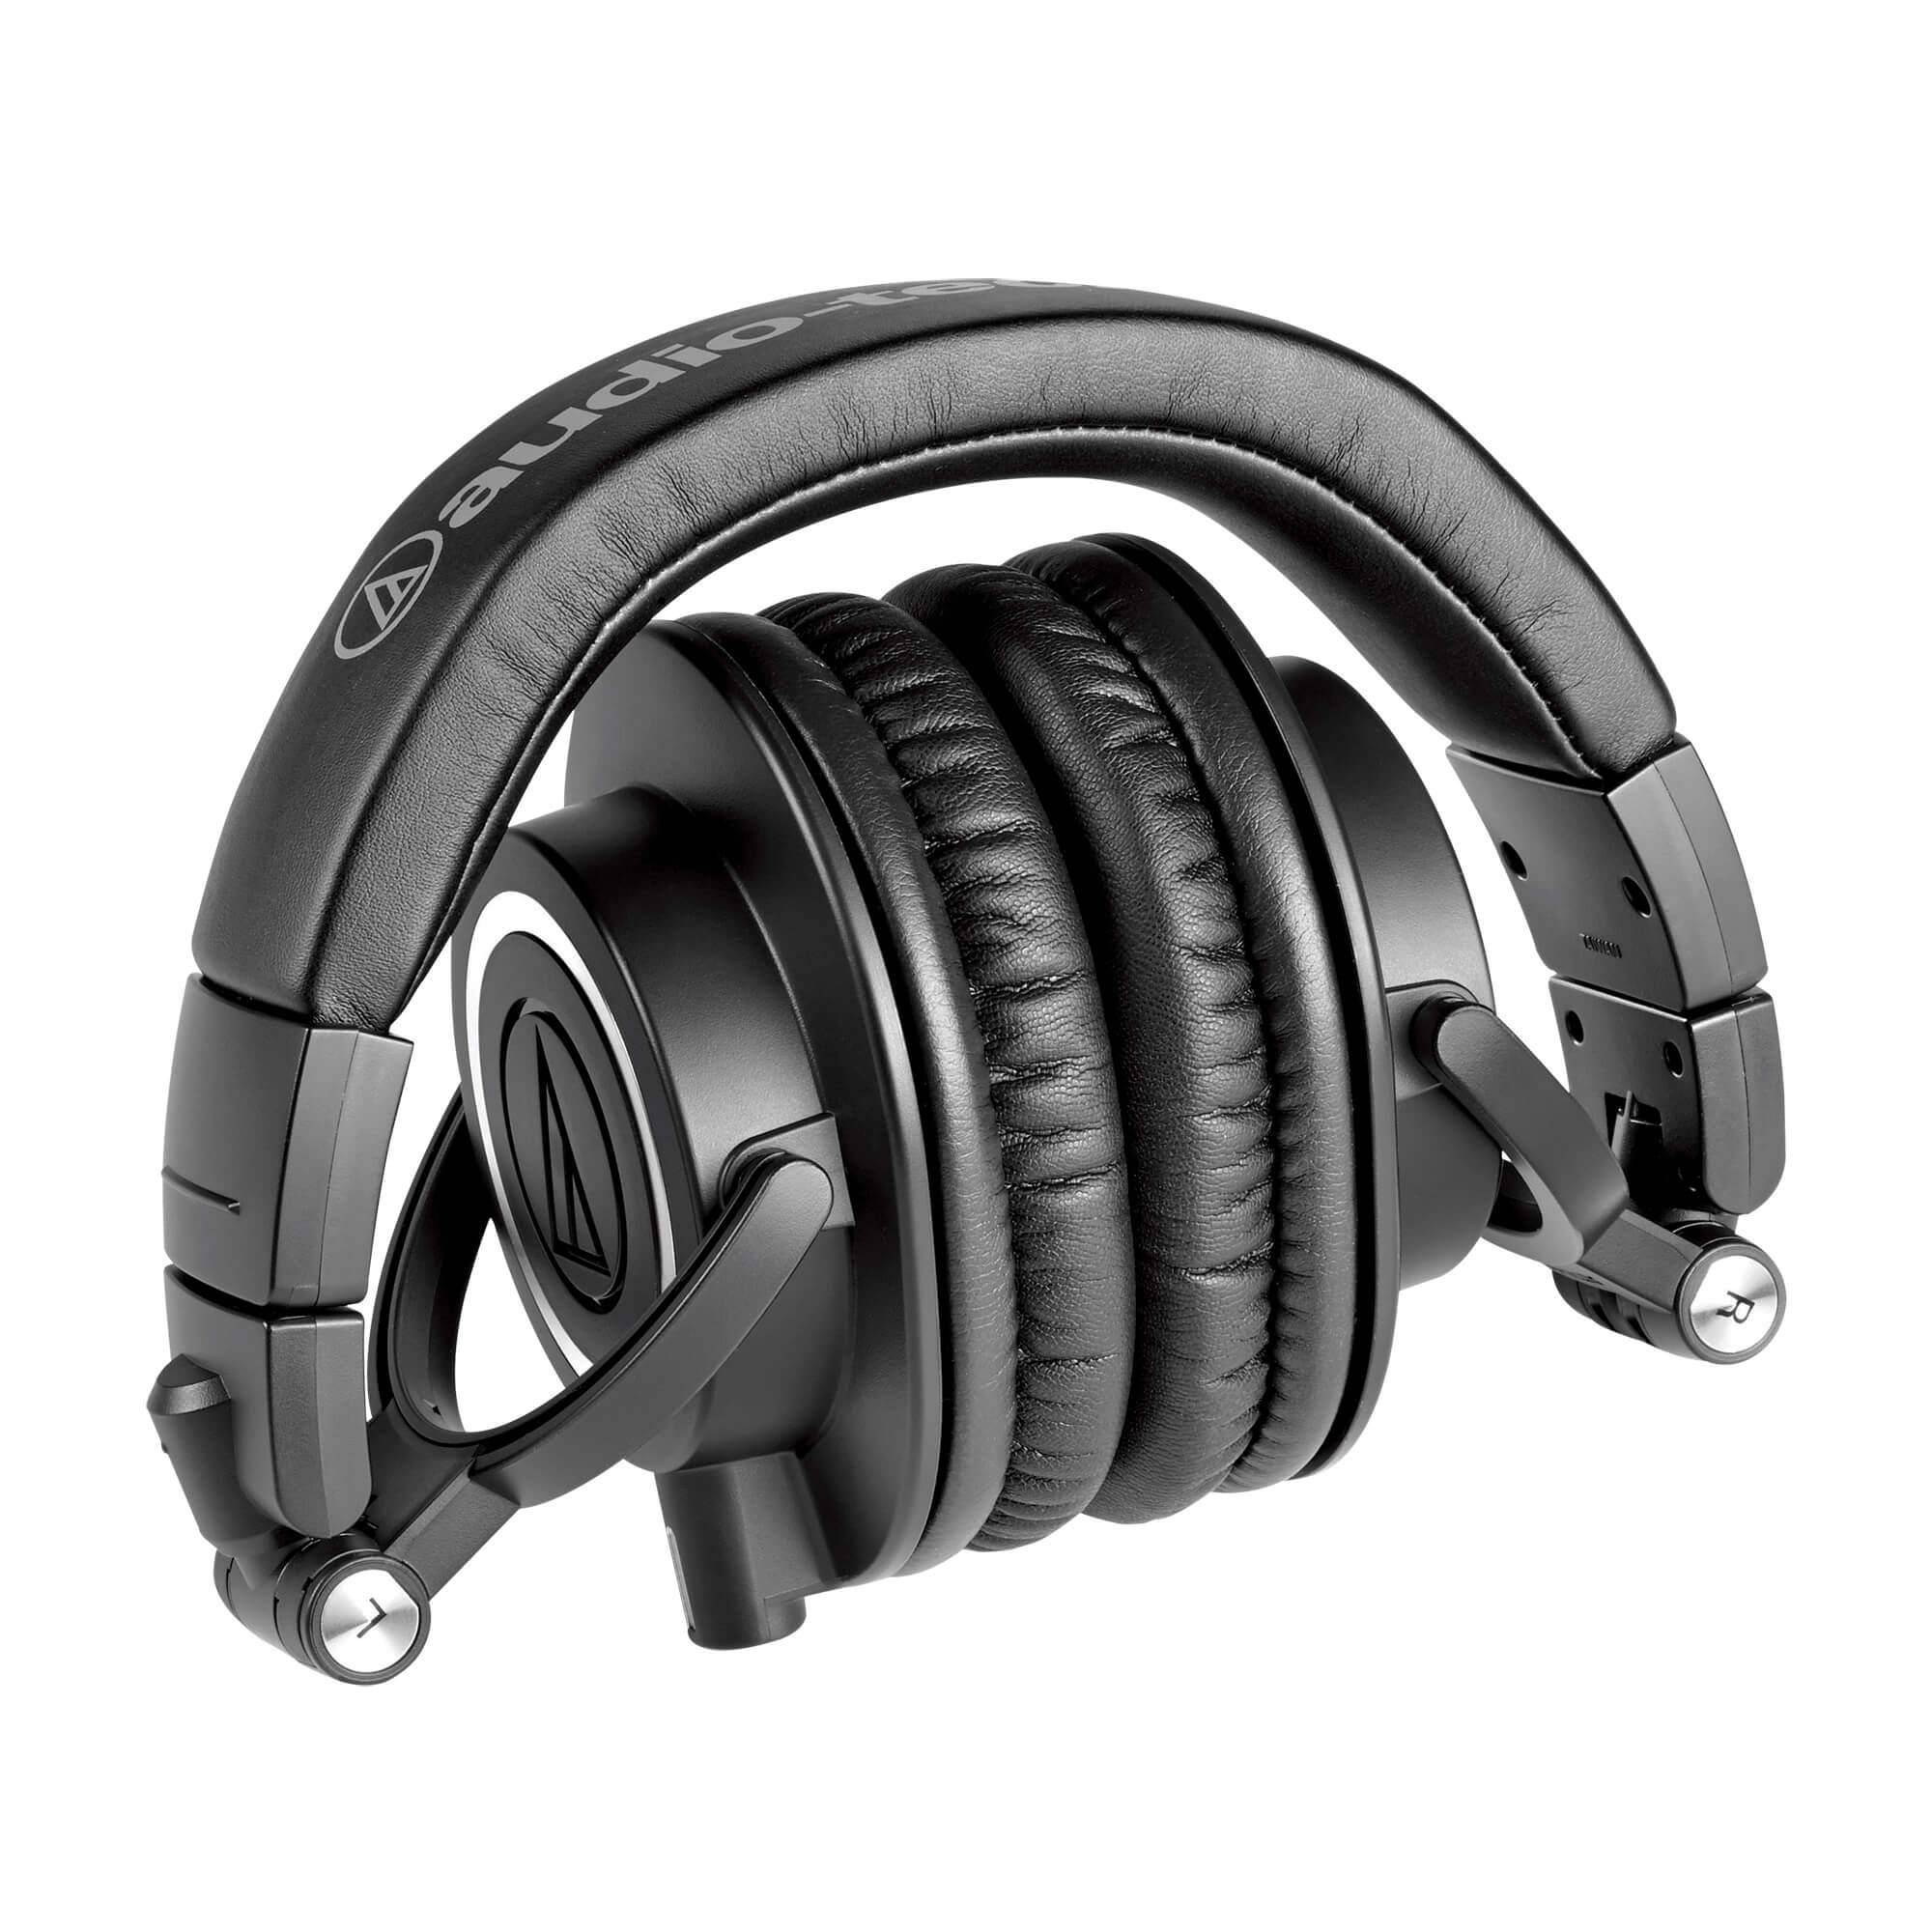 Audio-Technica ATH-M50x Professional Monitor Headphones, folded